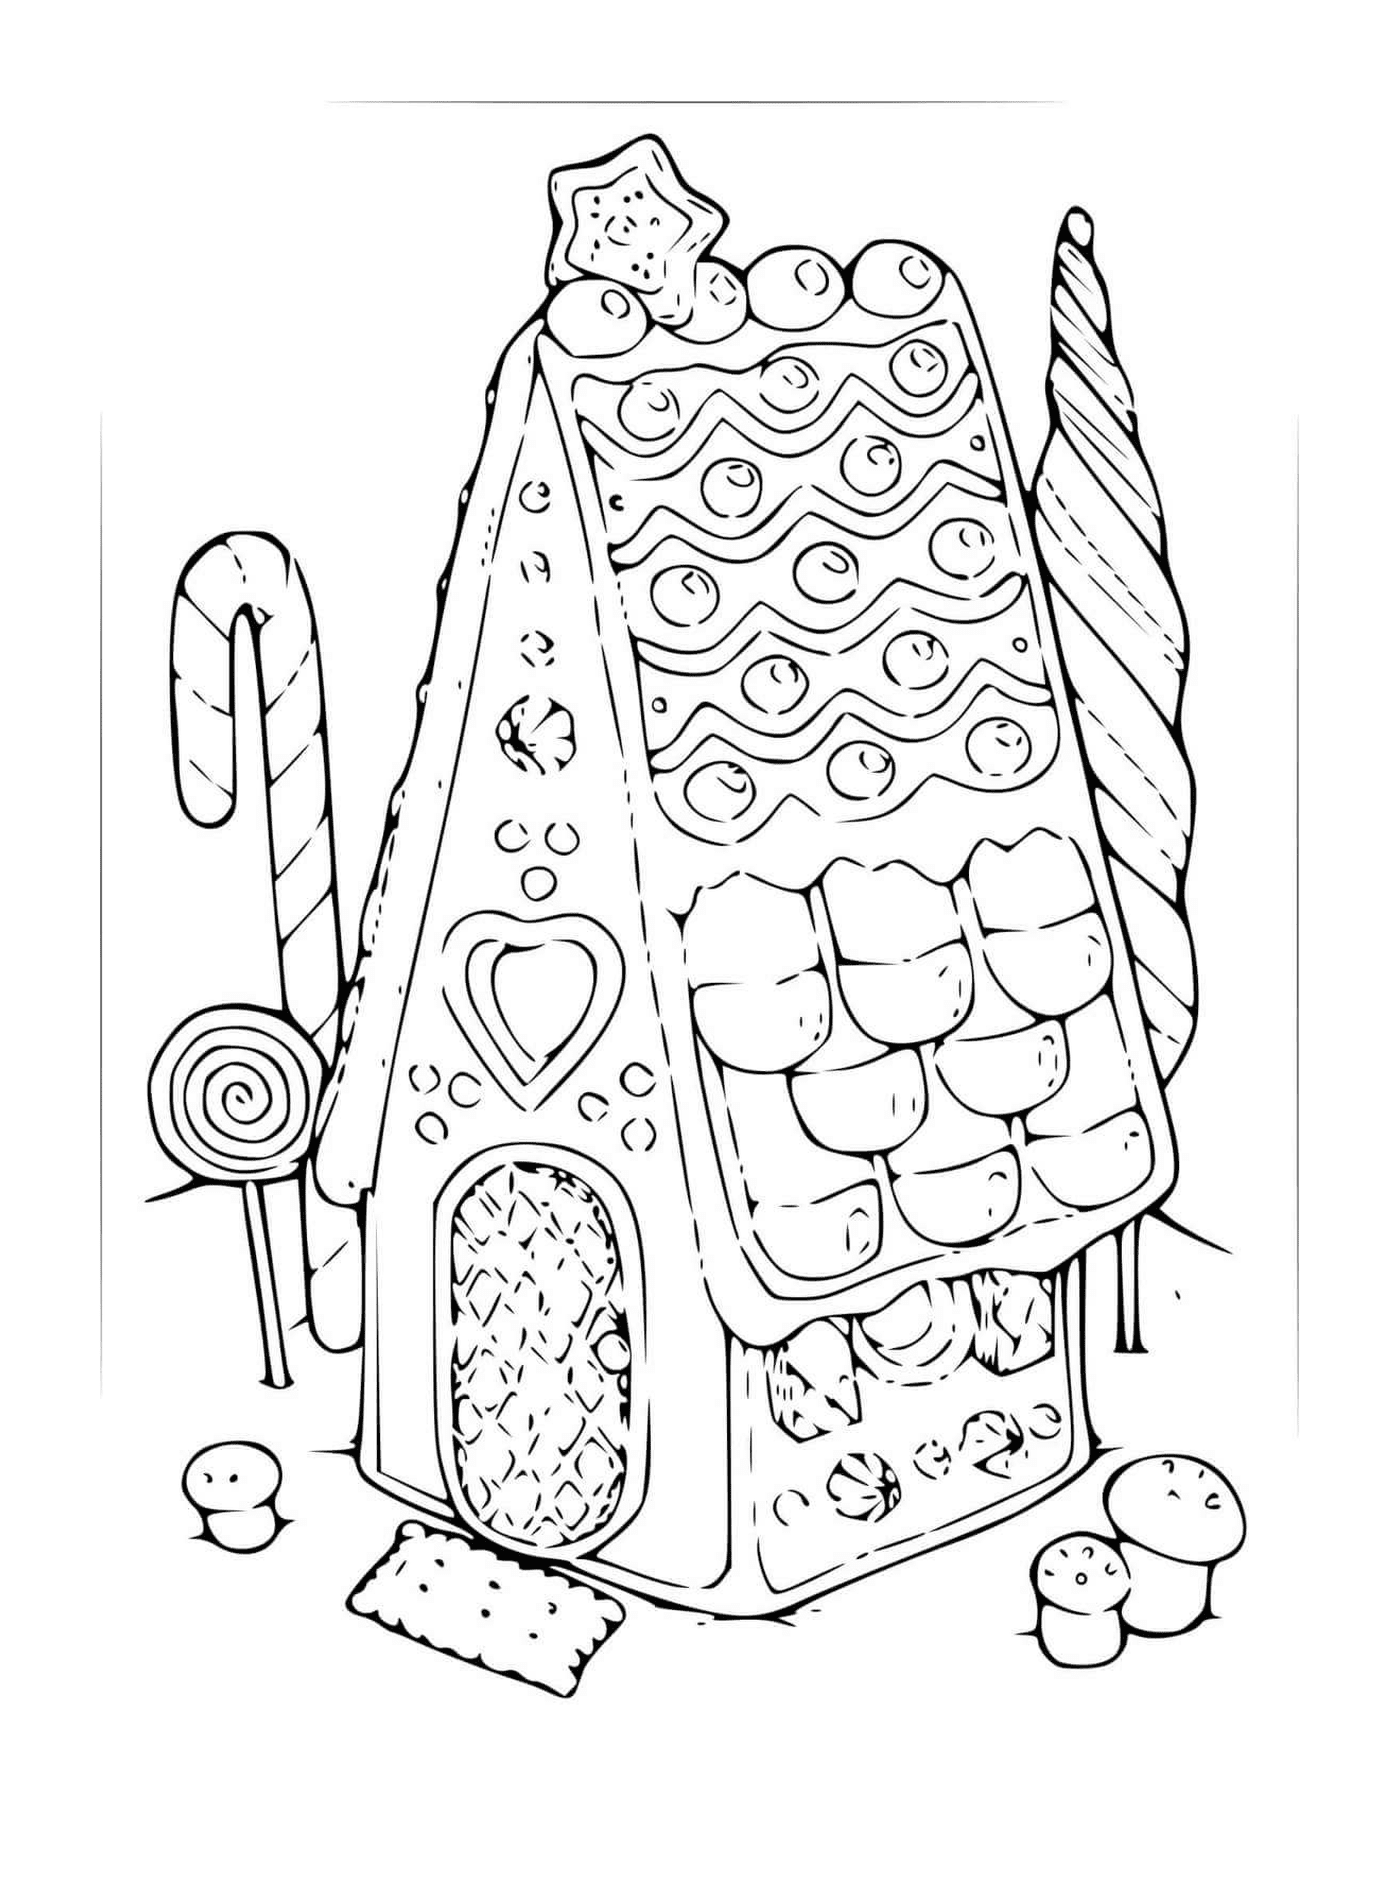  Casa d'epoca a forma di pan di zenzero 